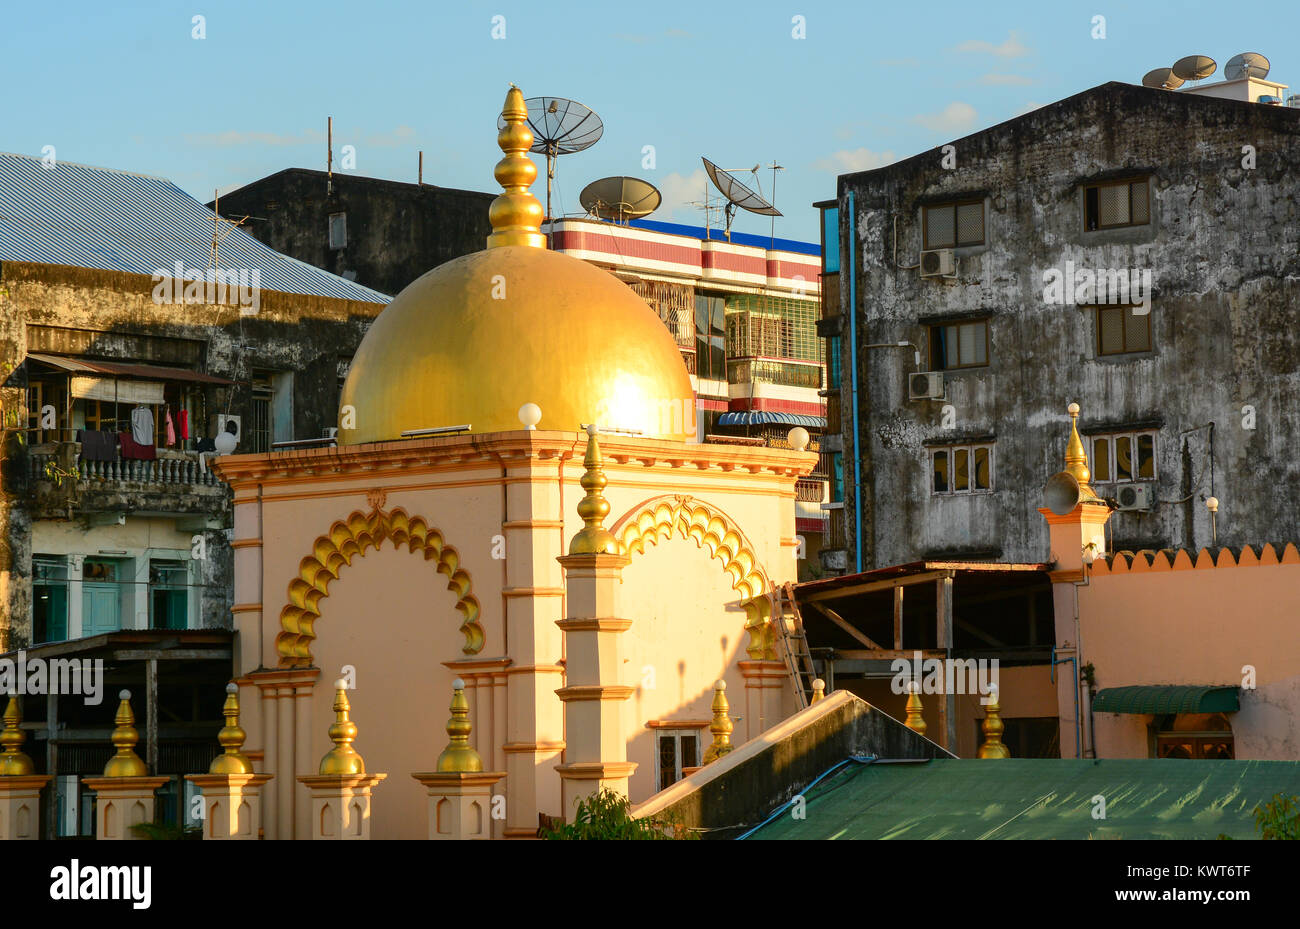 Yangon, Myanmar - Jan 14, 2015. Alte Gebäude mit goldenen Kuppel in der Innenstadt von Yangon, Myanmar. Yangon ist die größte Stadt in Myanmar mit Bevölkerung über Stockfoto